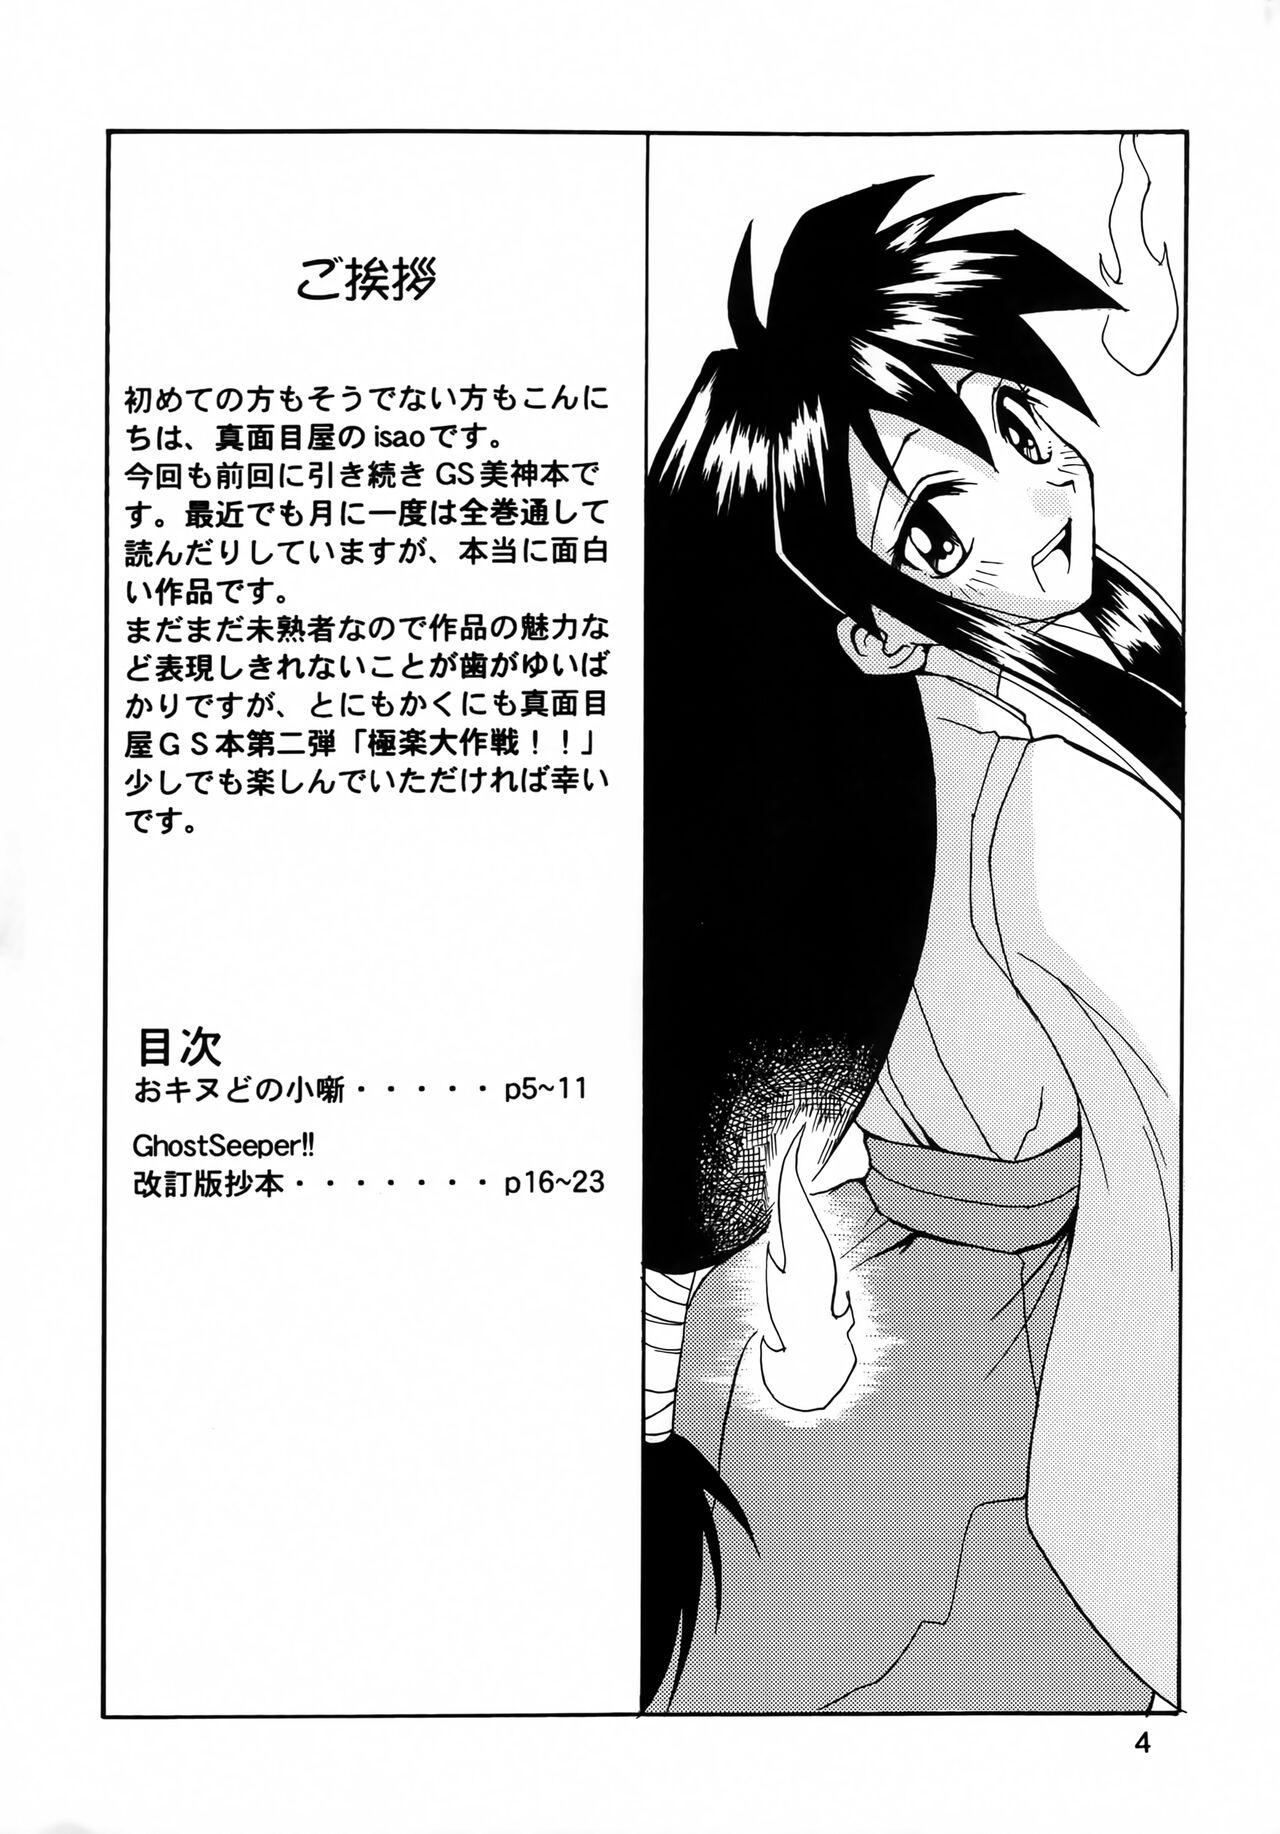 Hymen GhostSweeper!! 2 Gokuraku Daisakusen!! - Ghost sweeper mikami Animation - Page 3